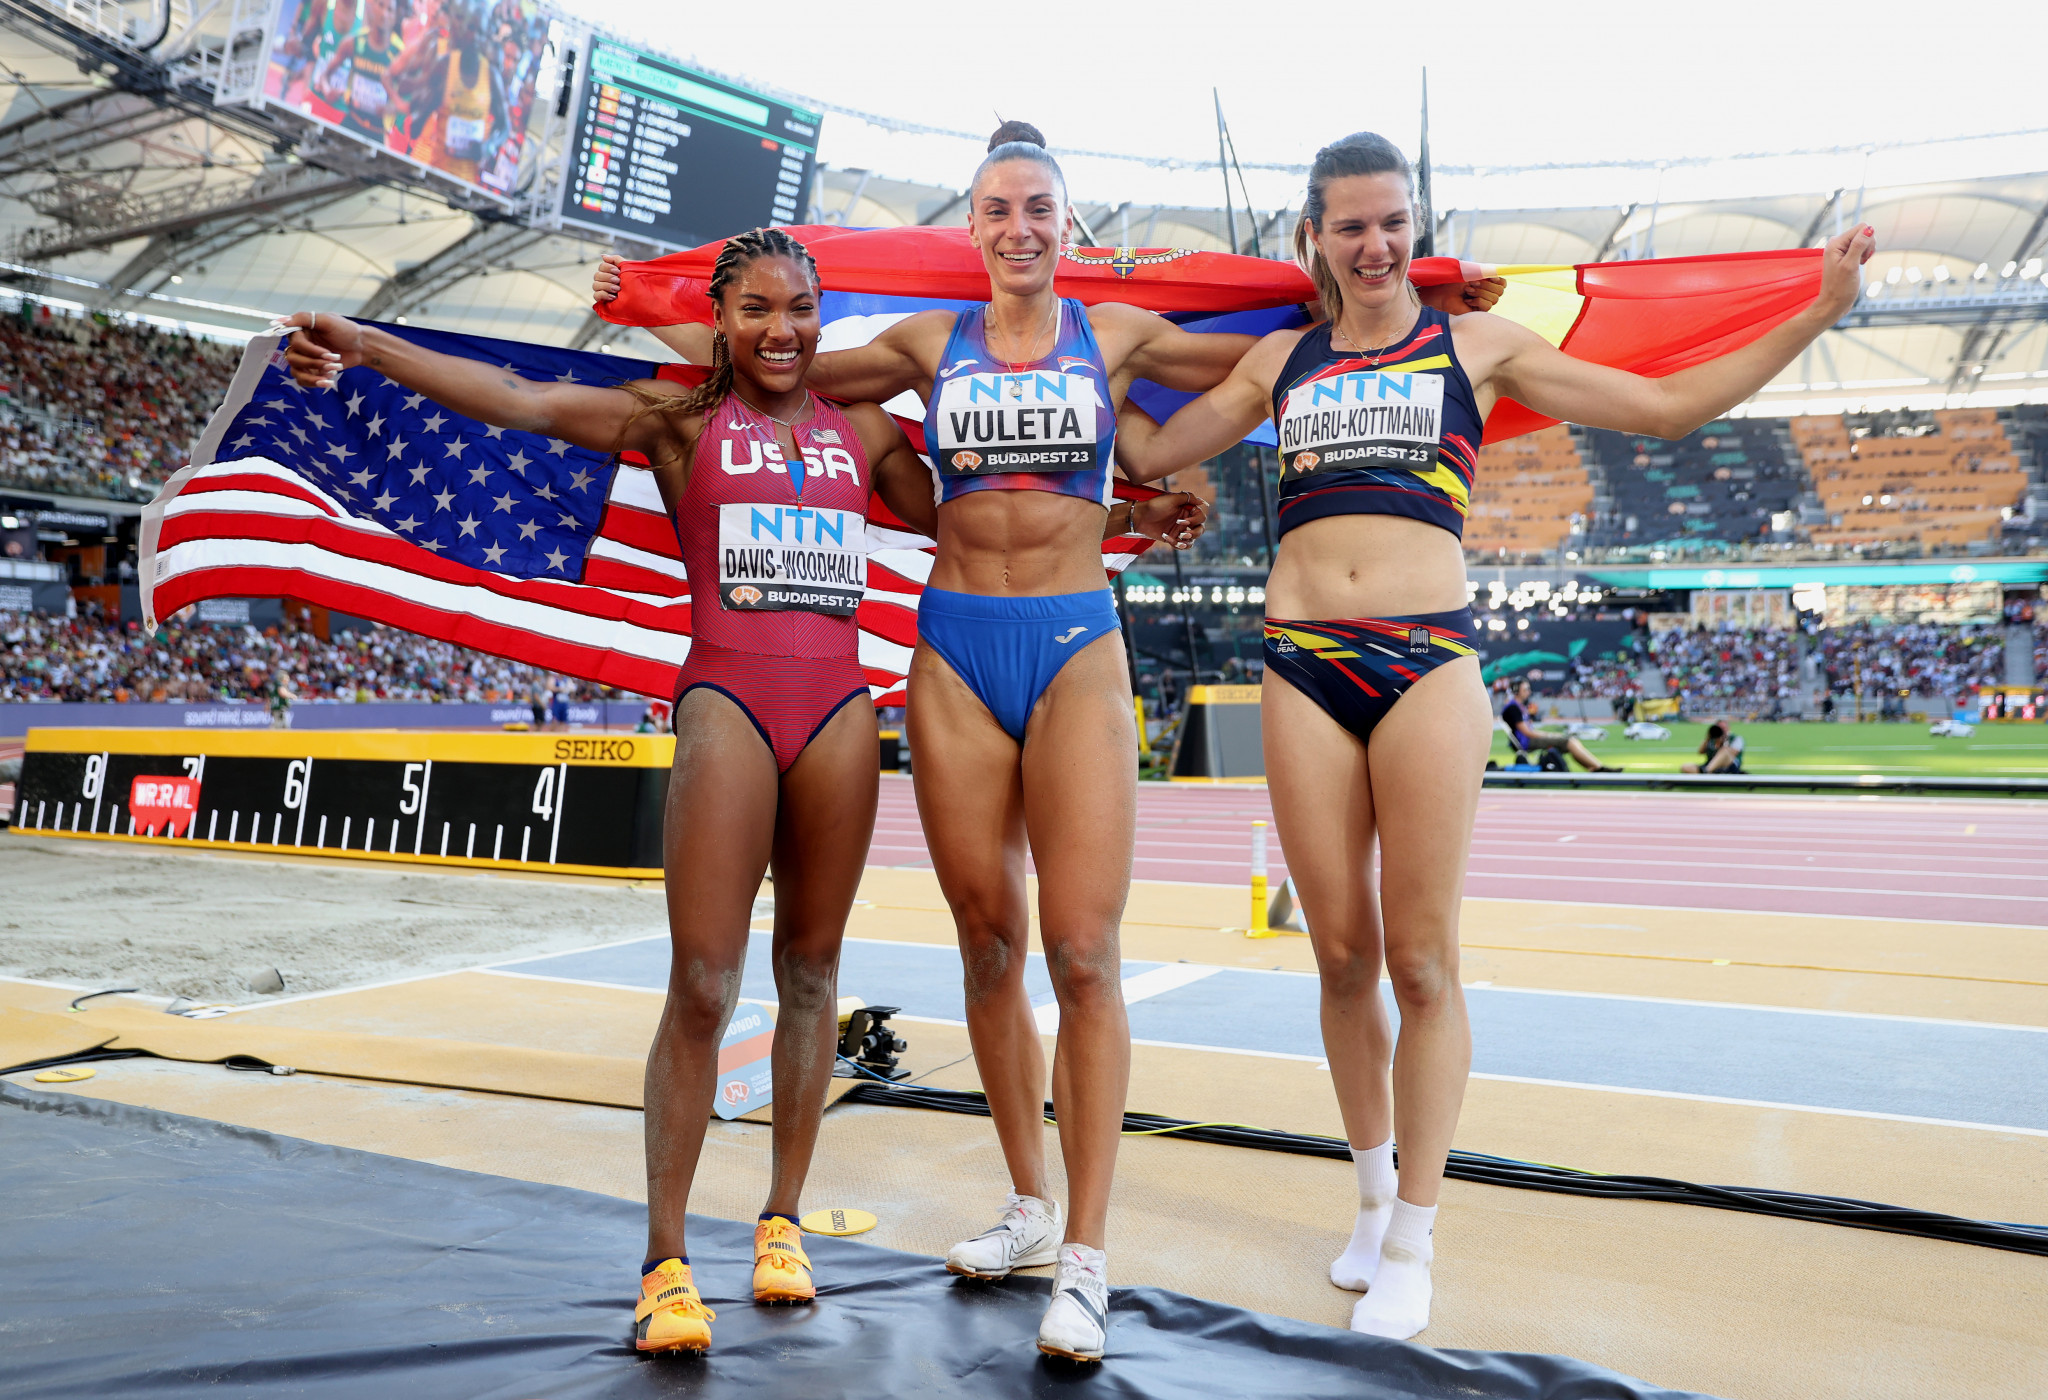 Ivana Vuleta of Serbia, centre, clinched women's long jump gold ahead of Tara Davis-Woodhall of the US, left, and Romania's Alina Rotaru-Kottmann, right ©Getty Images